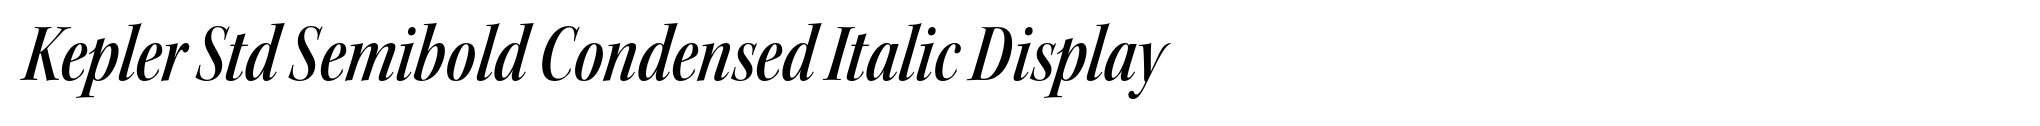 Kepler Std Semibold Condensed Italic Display image